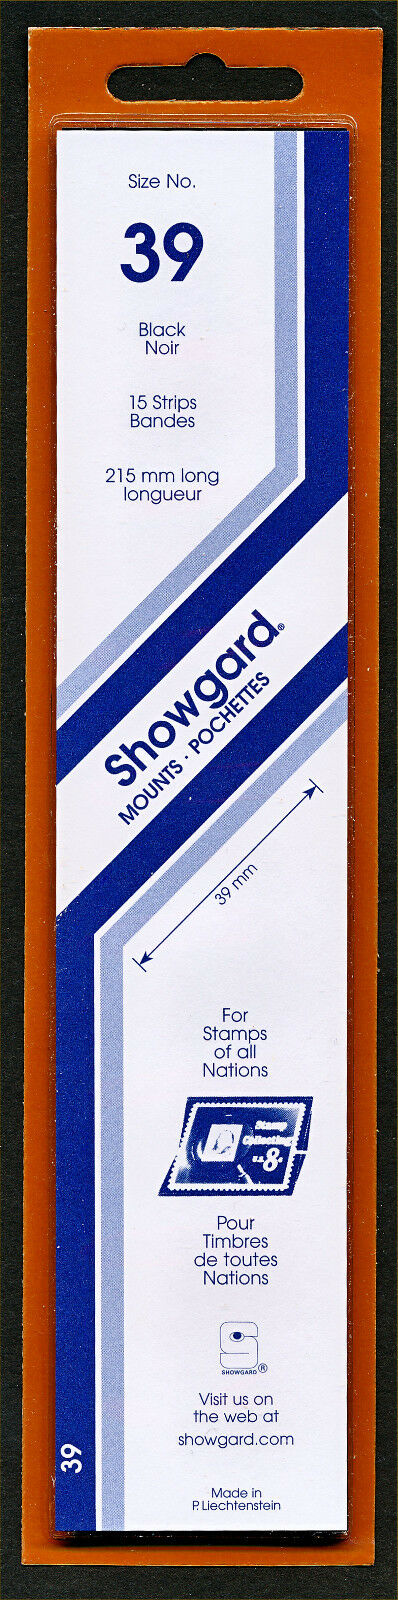 Showgard Stamp Mount Size 39/215 Mm - Black (pack Of 15) (39x215  39mm)  Strip